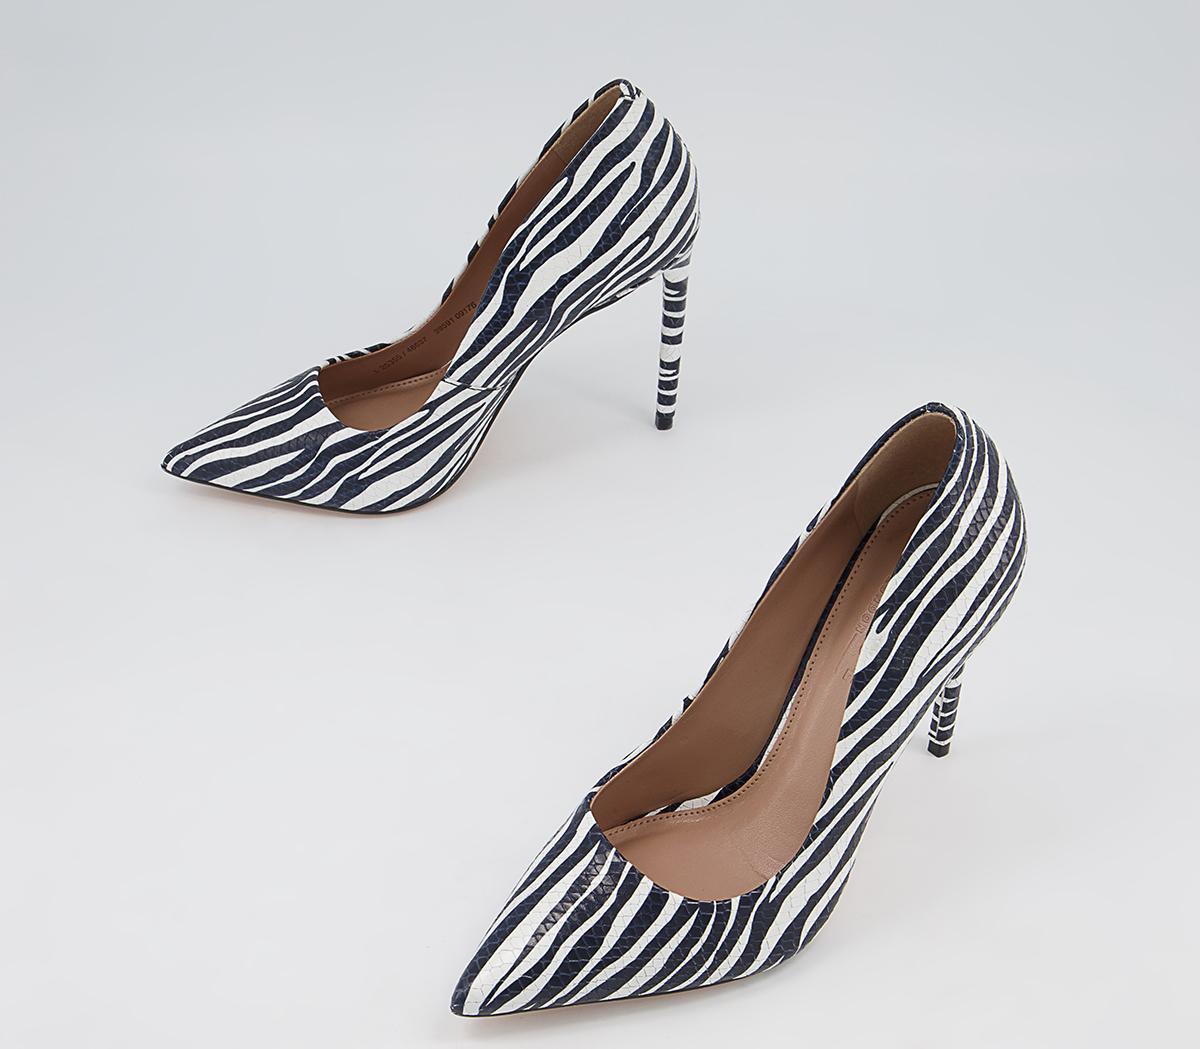 OFFICE Harlem Pointed Court Stiletto High Heels Zebra Leather - High Heels